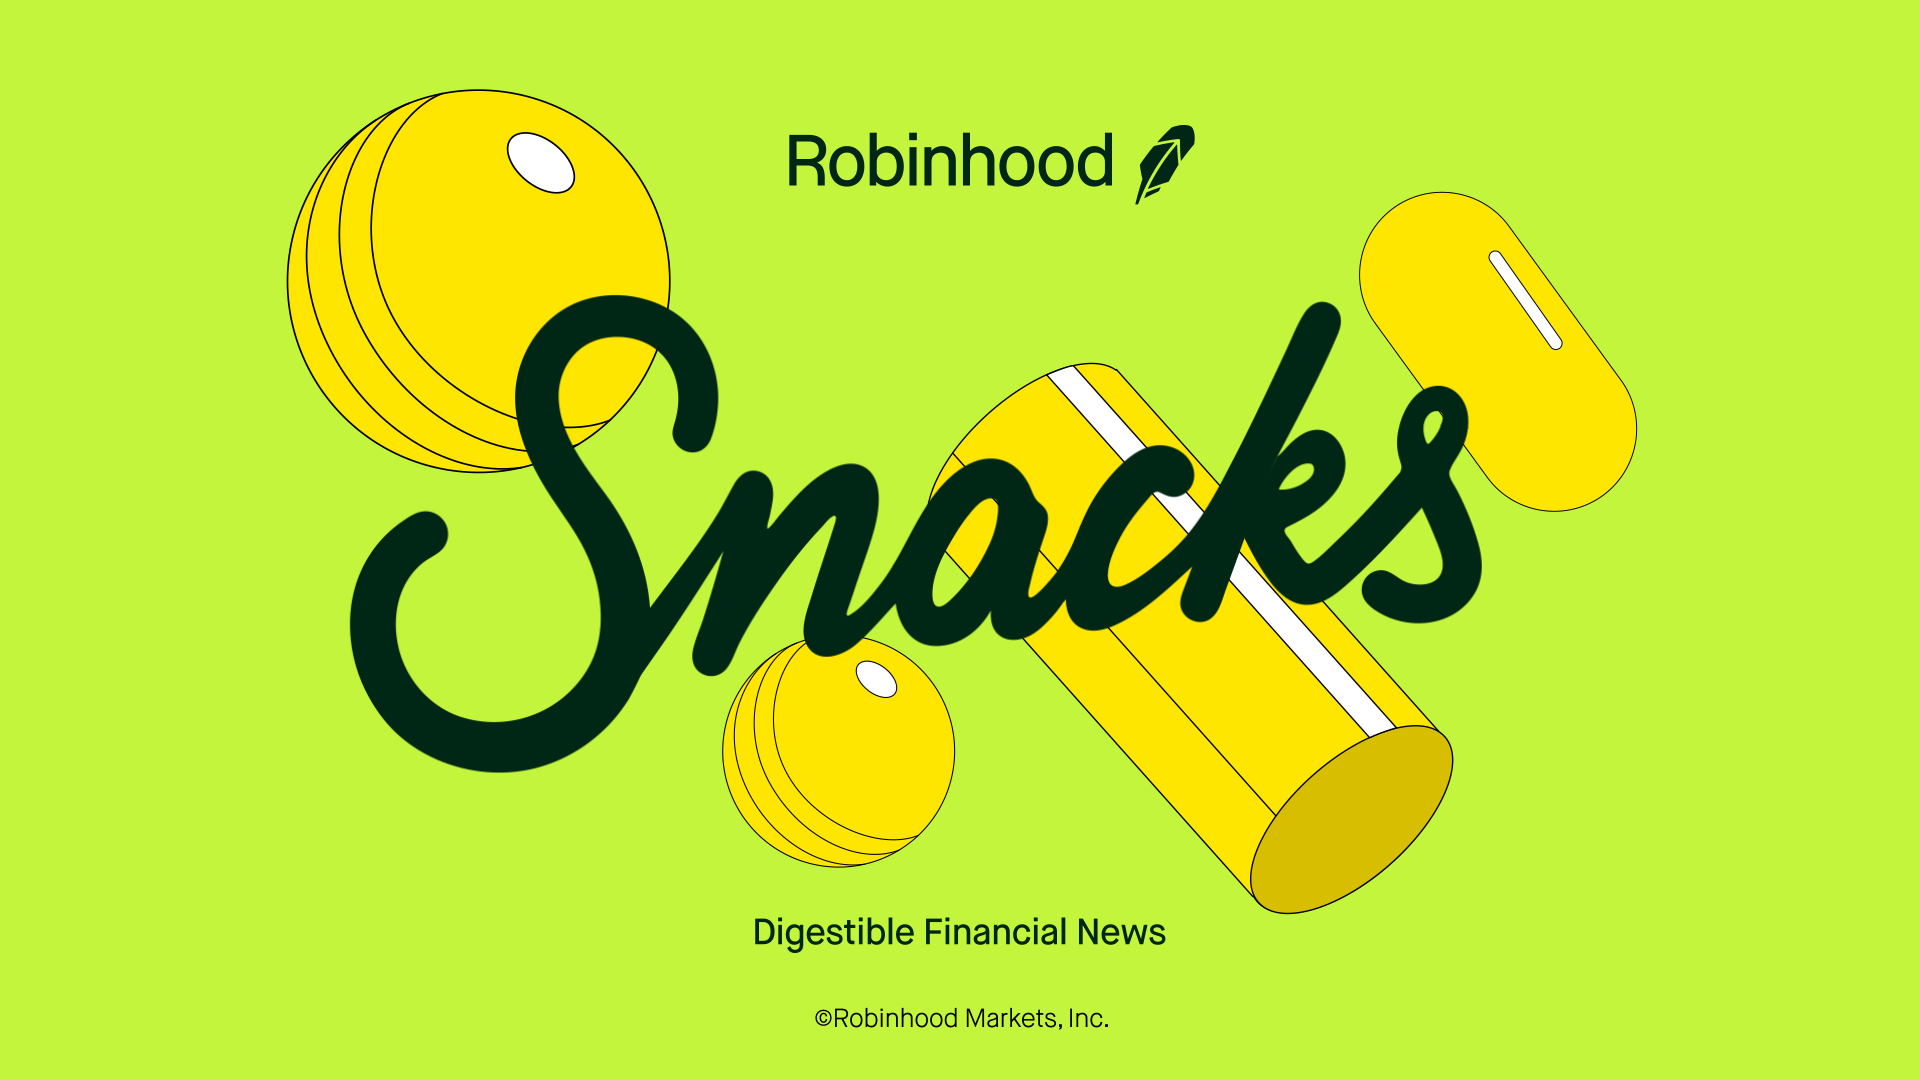 Robinhood Snacks Launches New Video Series